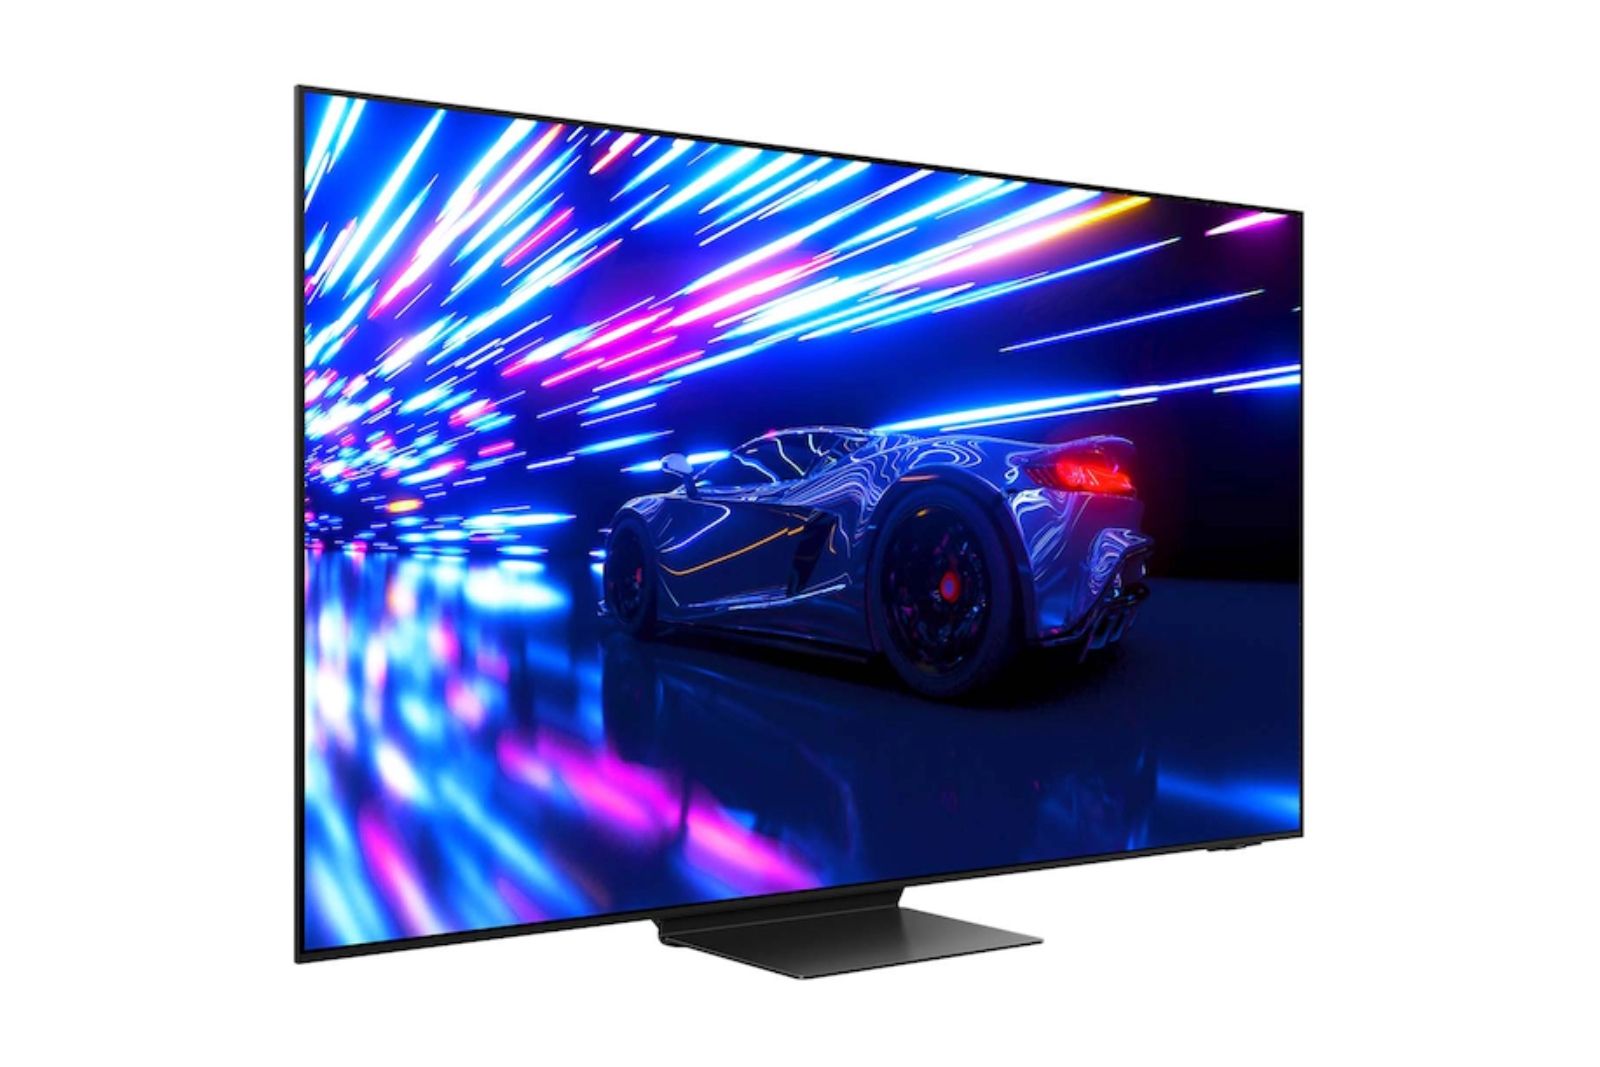 Samsung's thin 4K OLED TV.